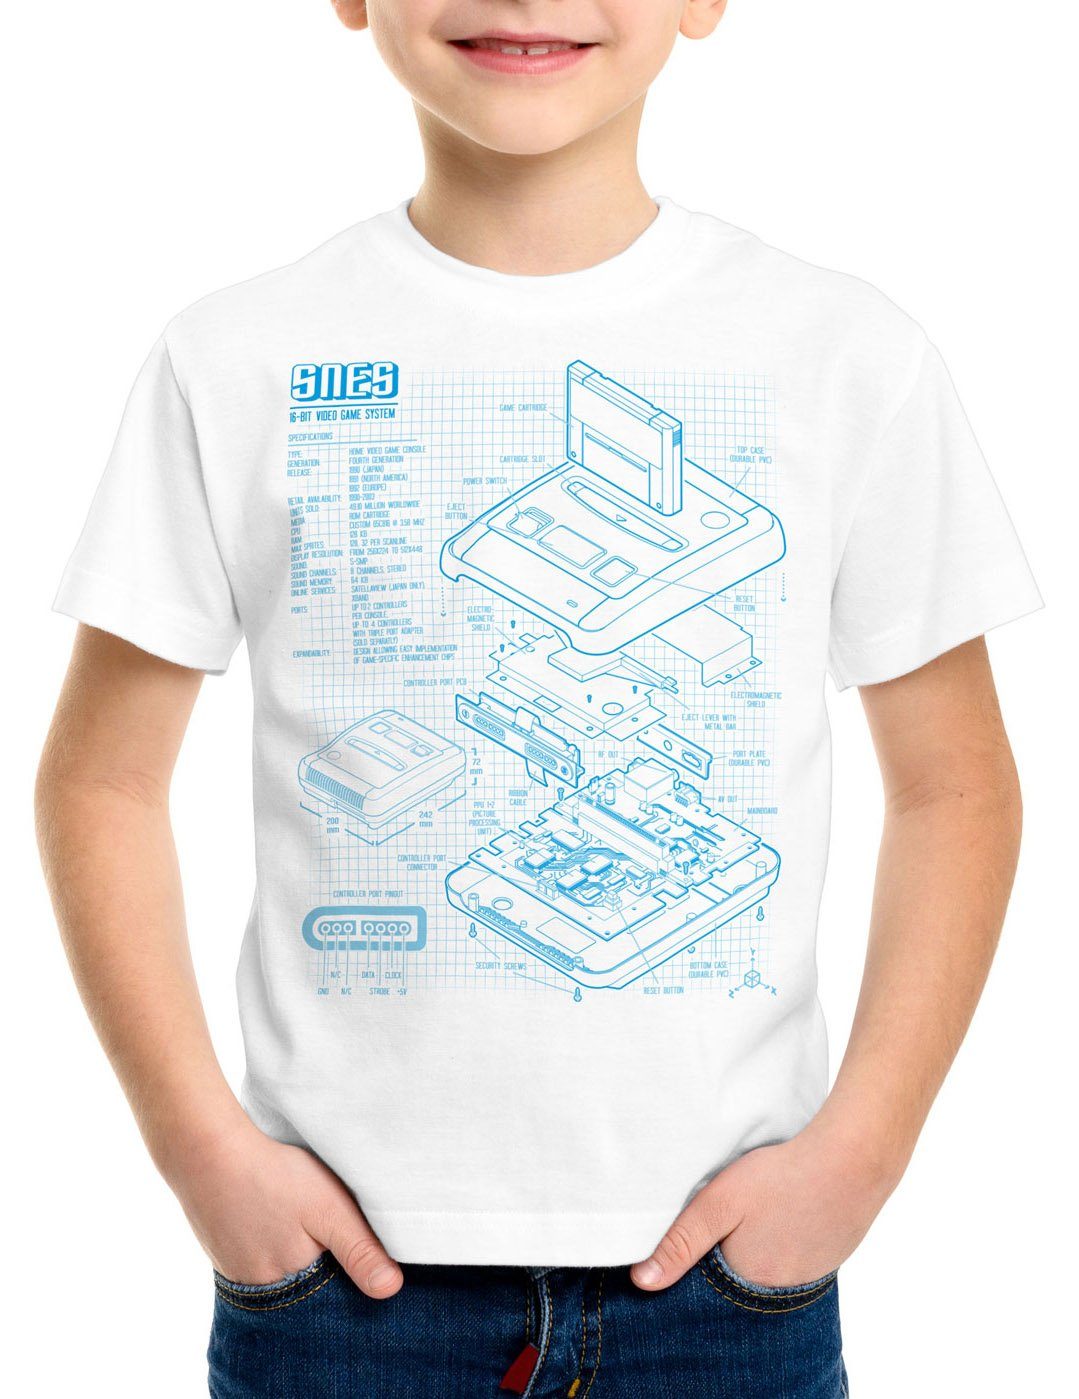 16-Bit Videospiel SNES Blaupause Kinder weiß T-Shirt style3 Print-Shirt